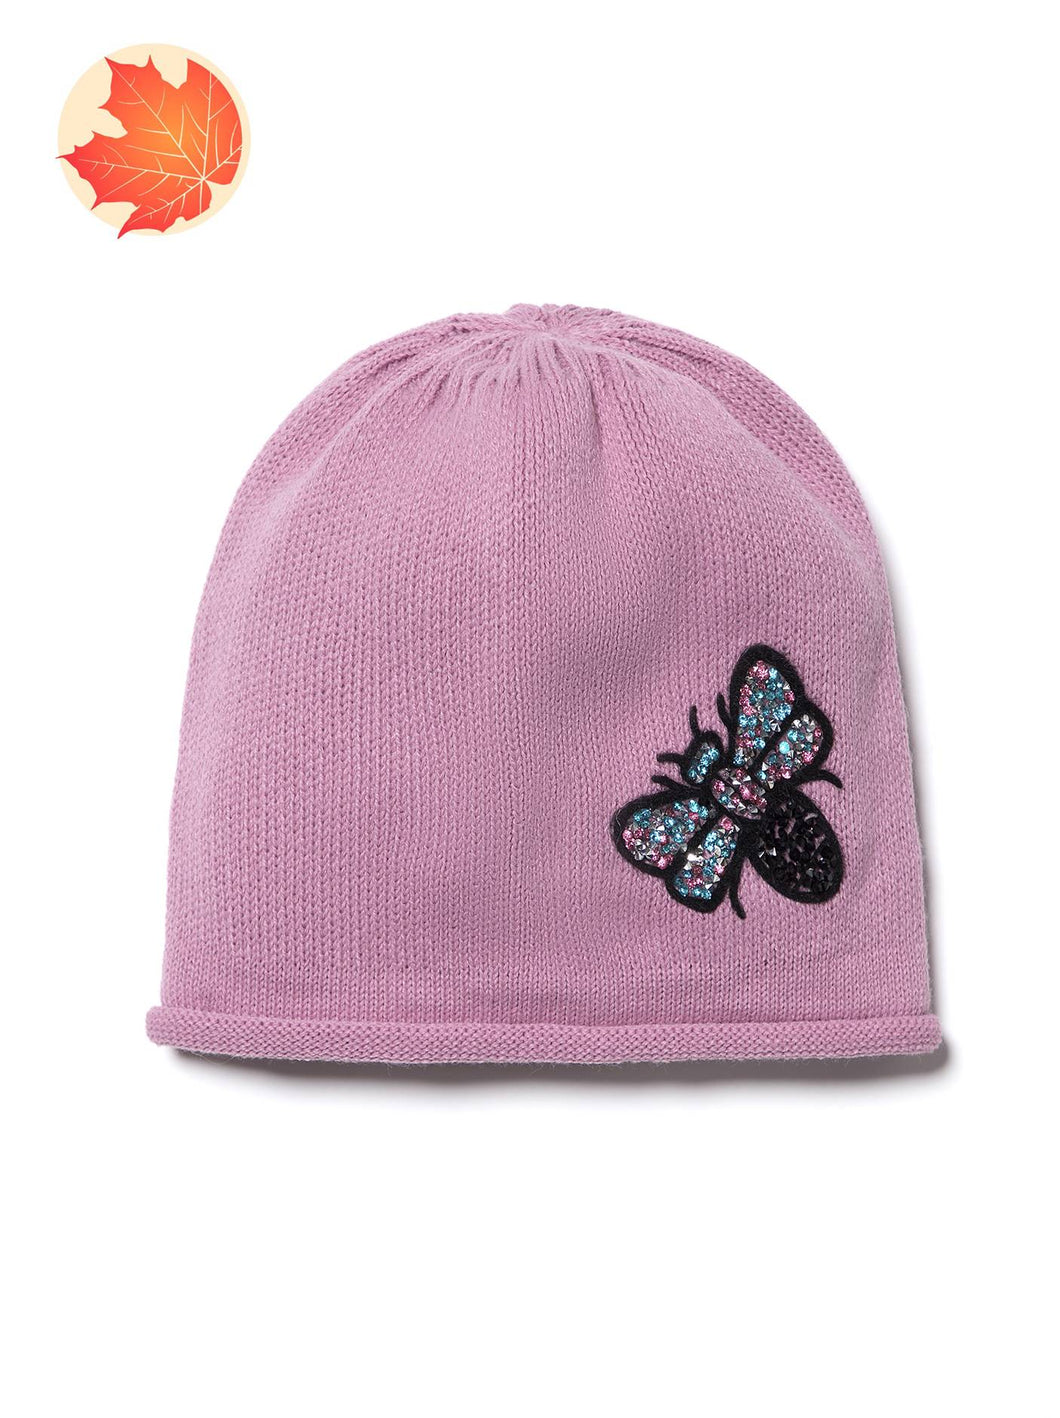 Conte/Esli Knitted Children's Hats - For Girls (18С-147СП)